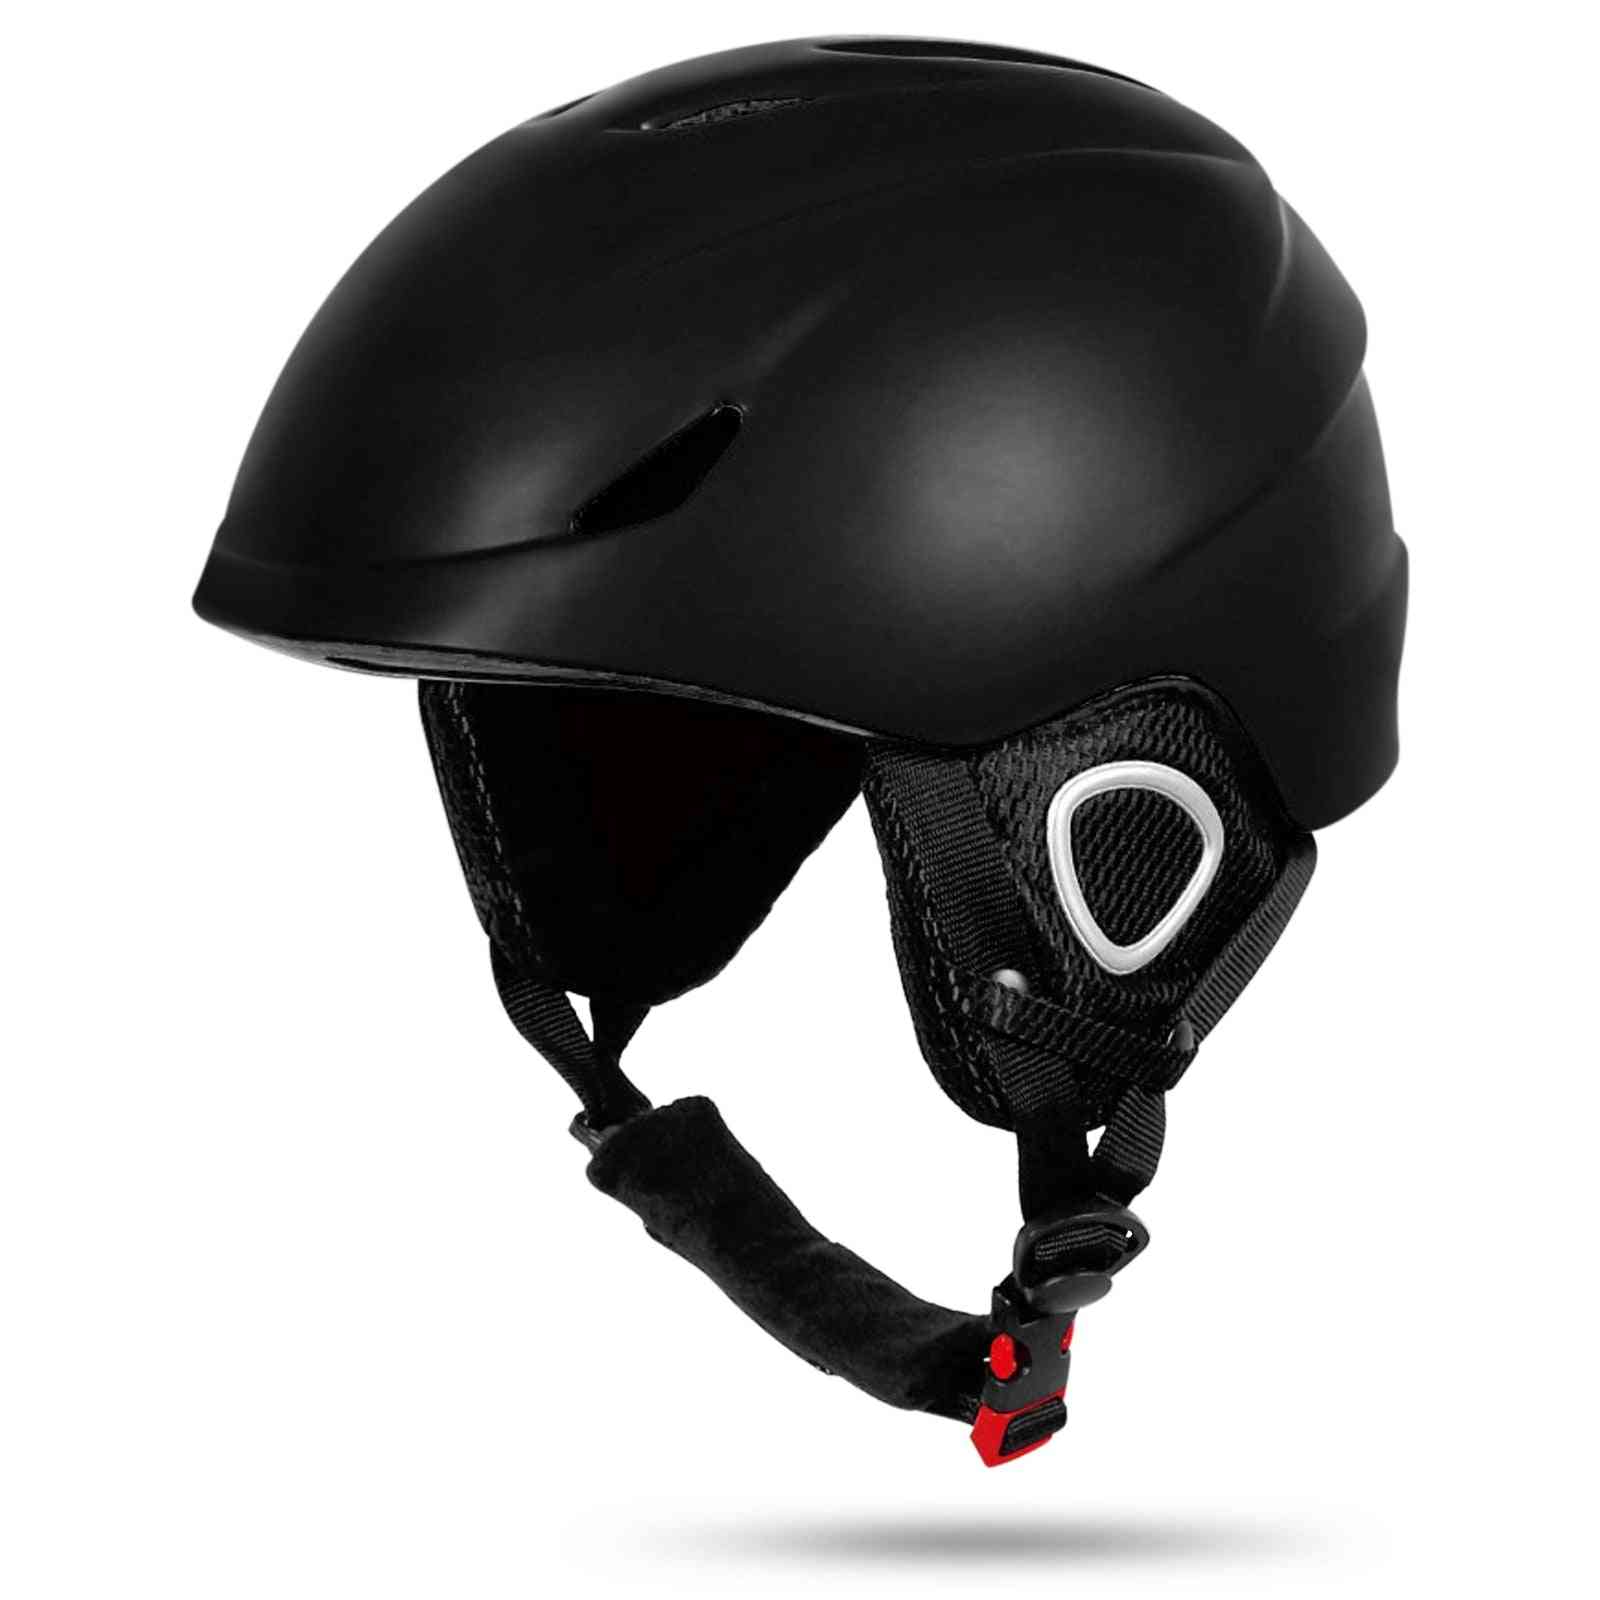 Skateboard Skiing Helmet, Sports Safety Helmet